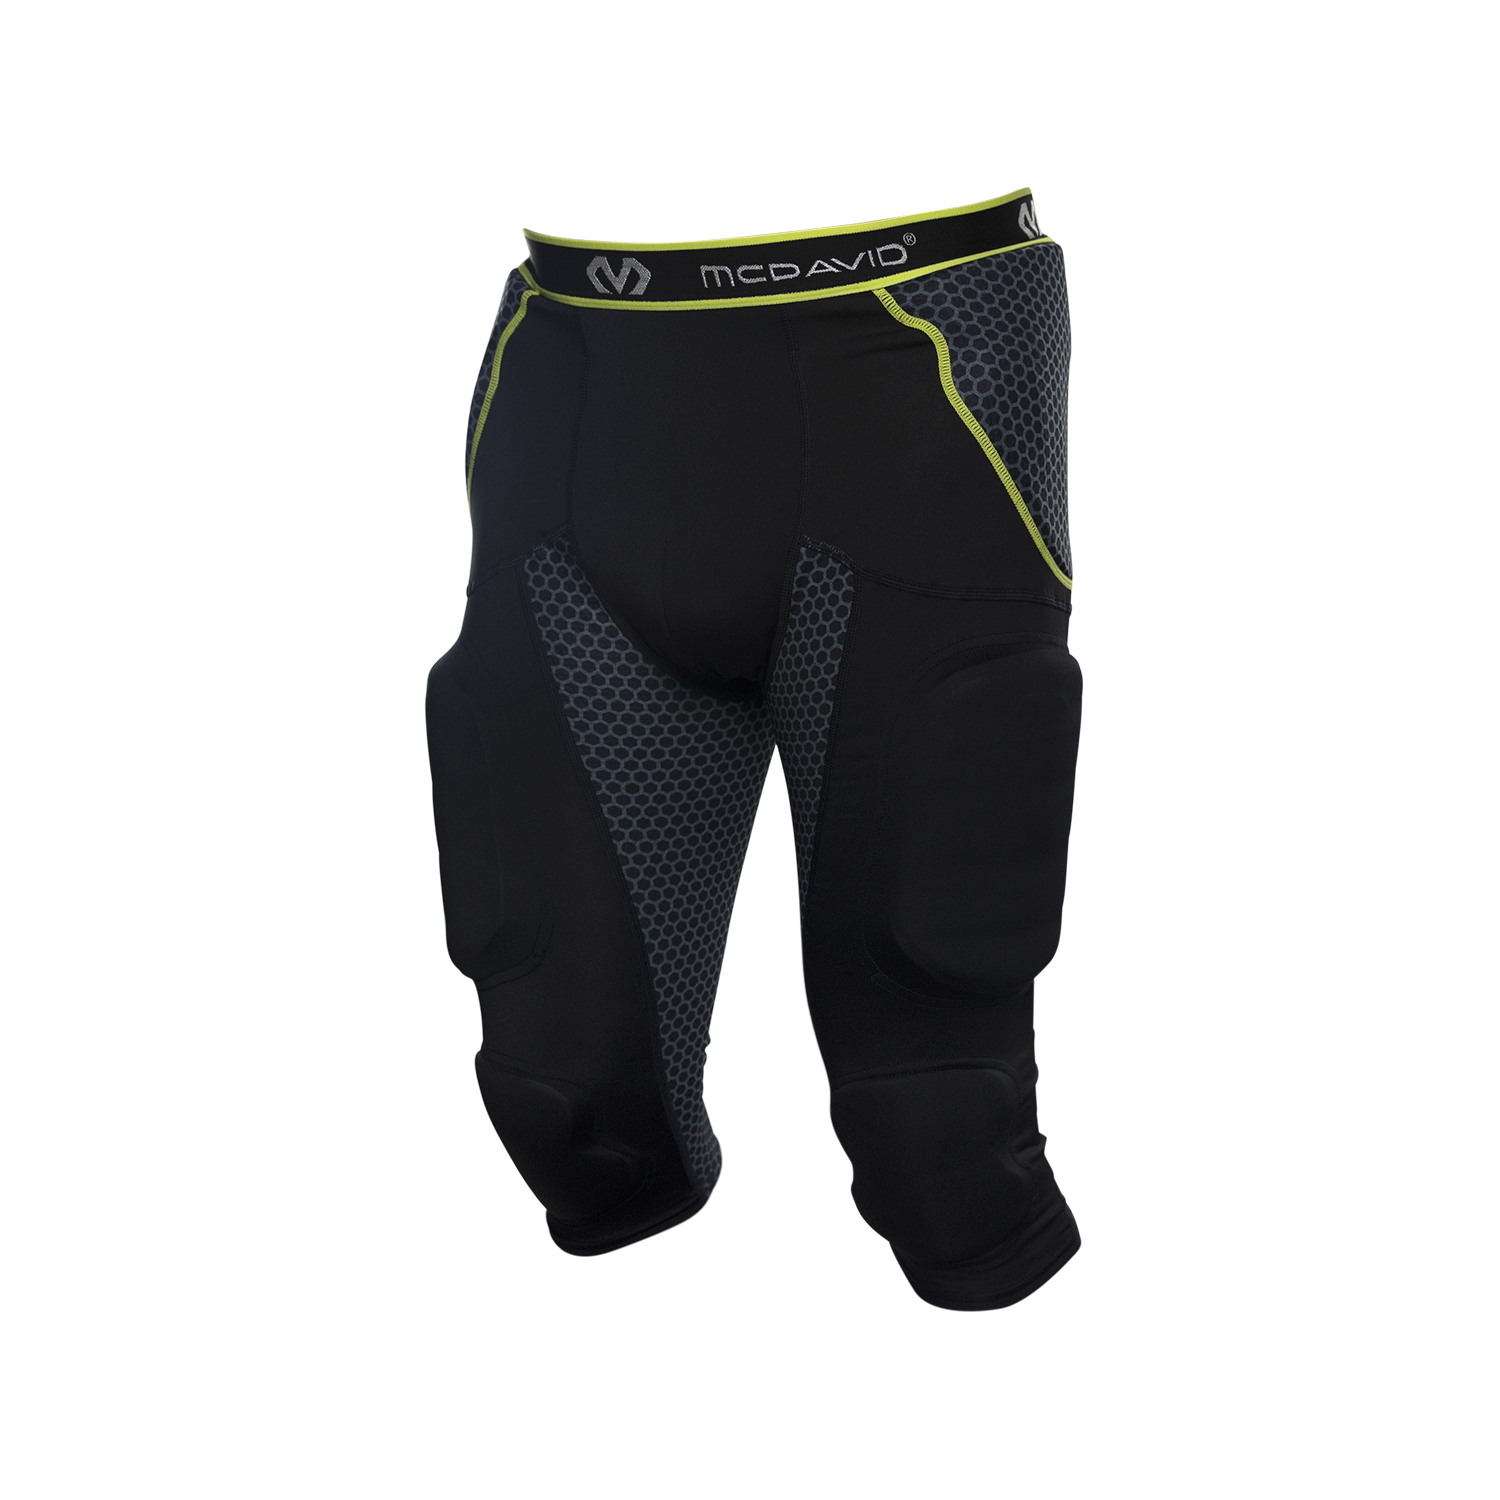  McDavid Elite Compression Tights. ¾ Length Knit Pants